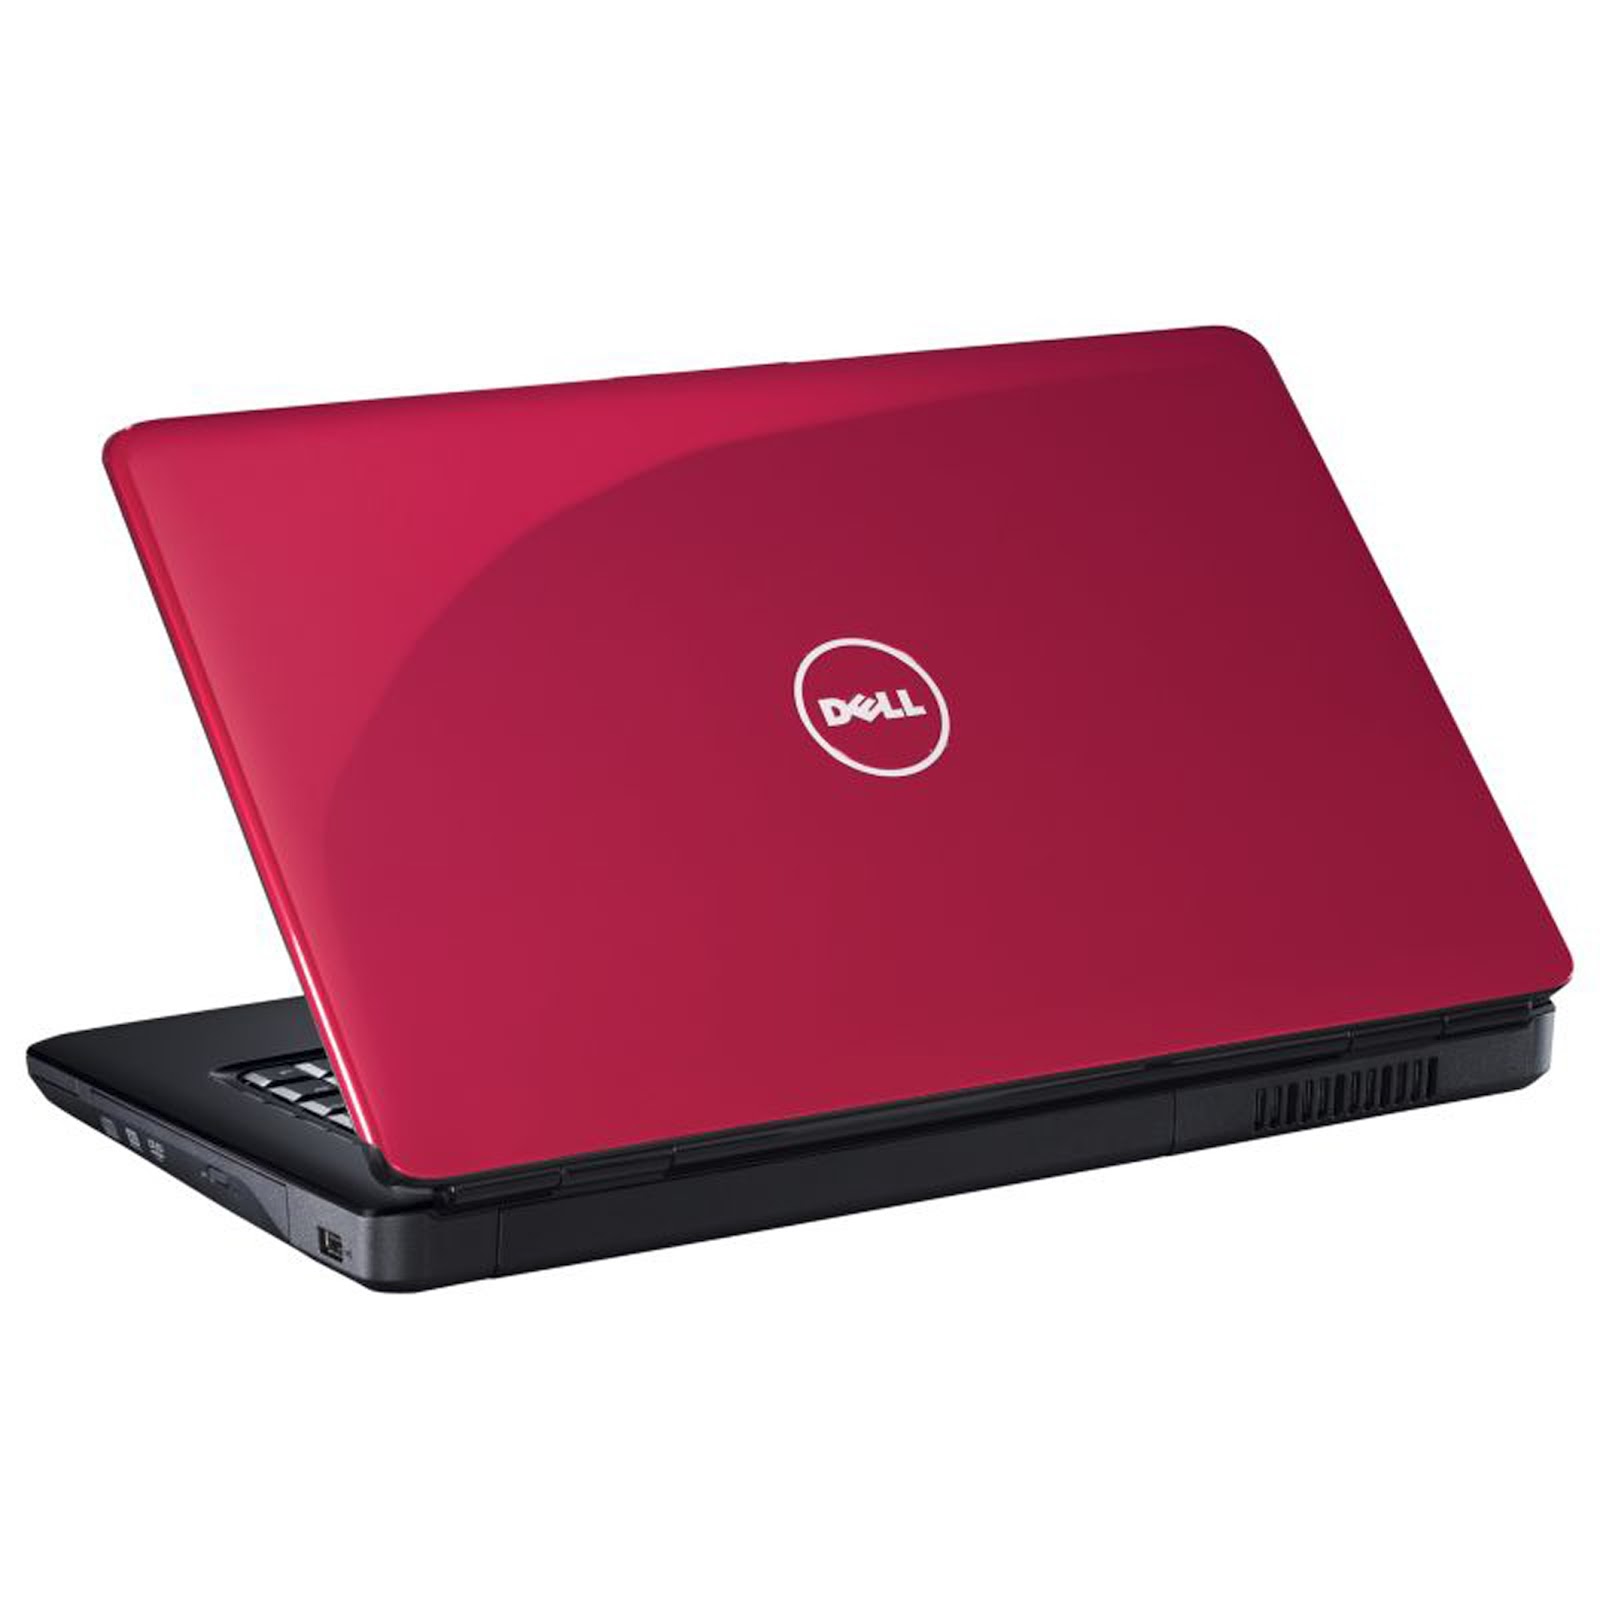 Red-Dell-Laptop.jpg